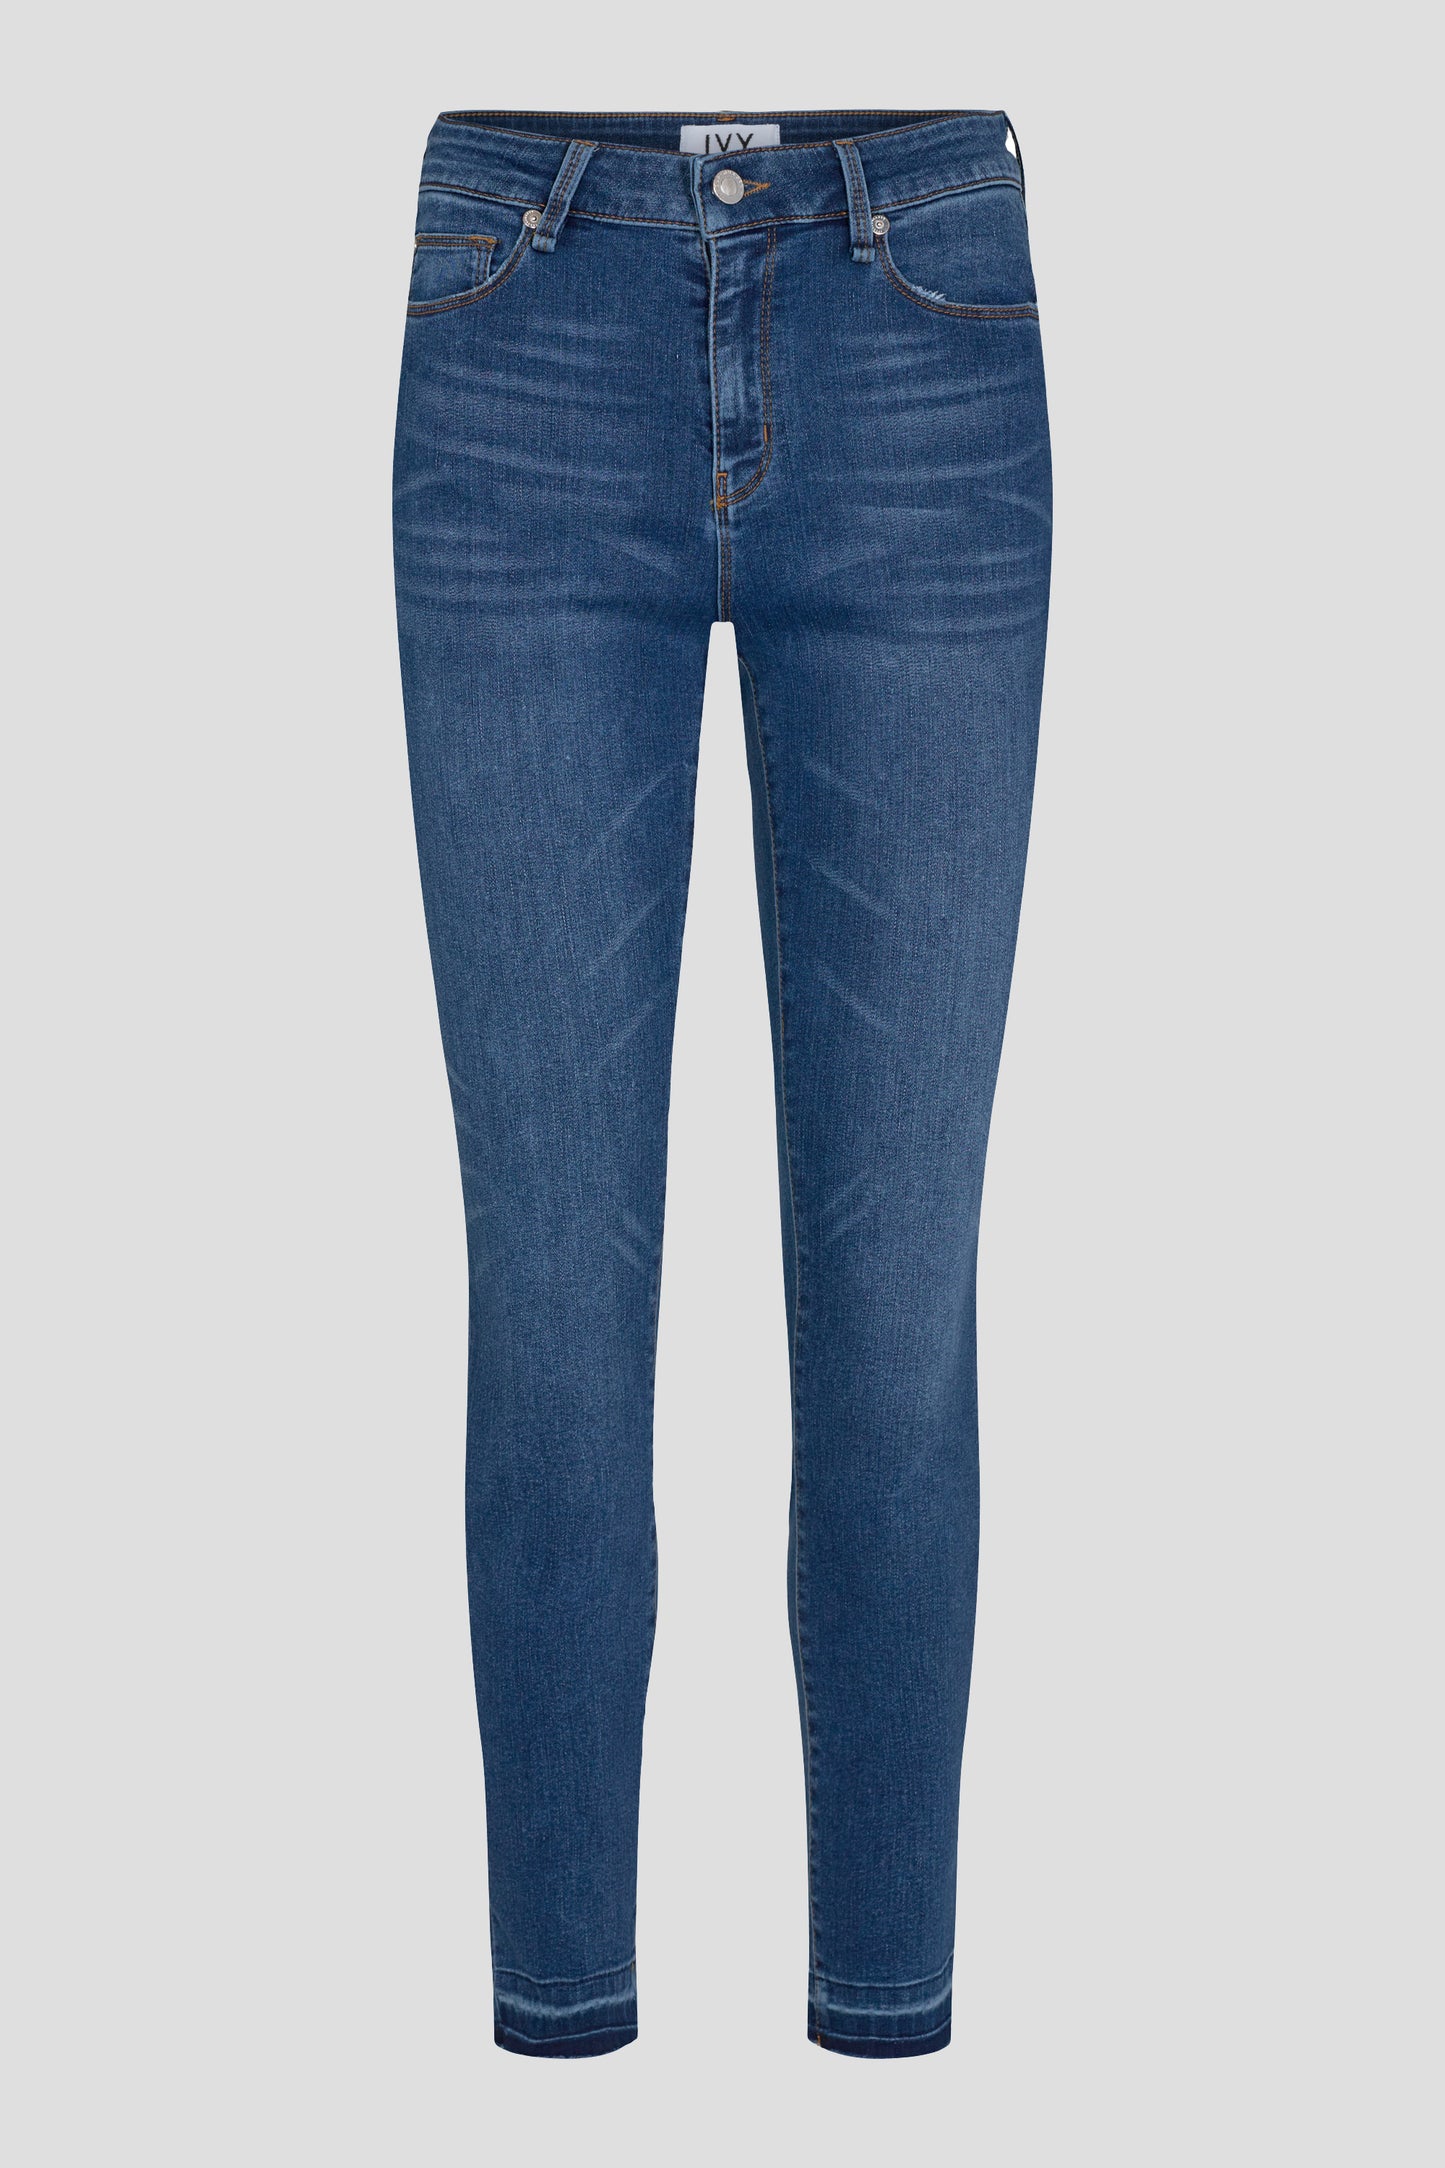 IVY Copenhagen IVY-Alexa Jeans wash Cool Barcelona Undone Hem Jeans & Pants 51 Denim Blue